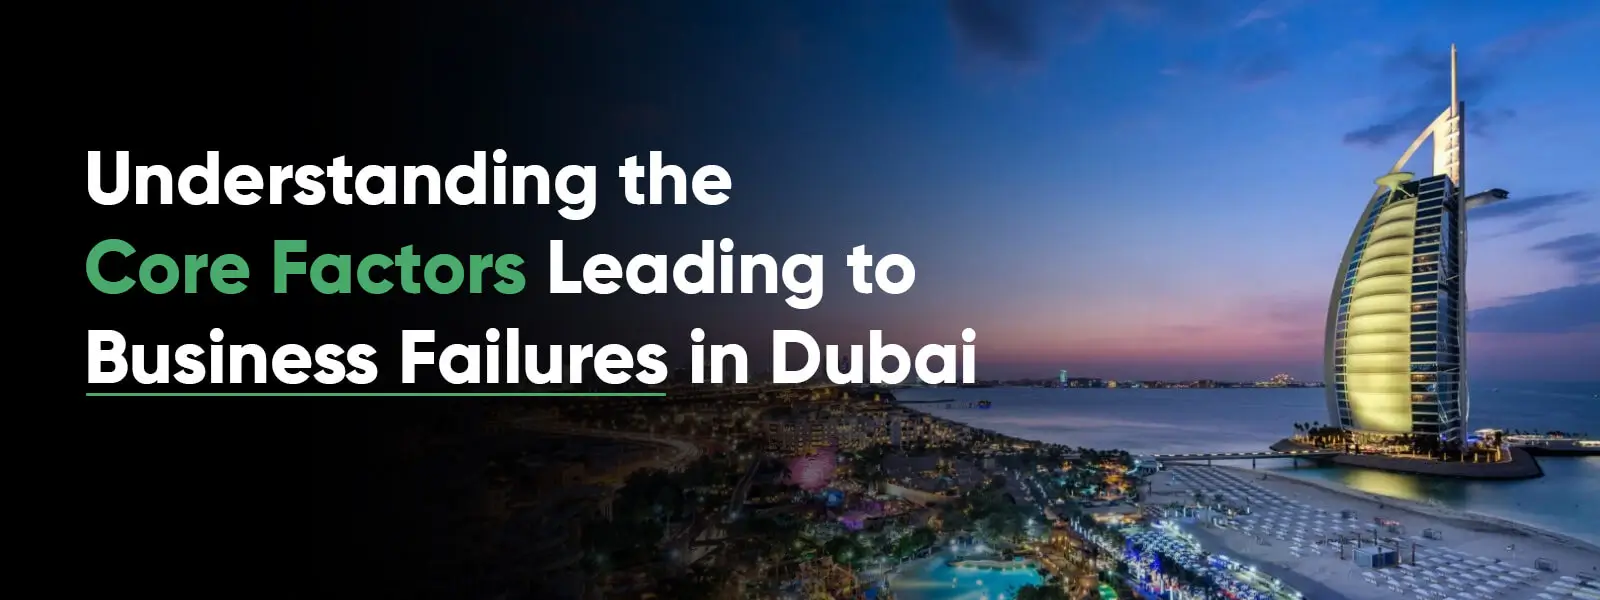 Business Failures in Dubai